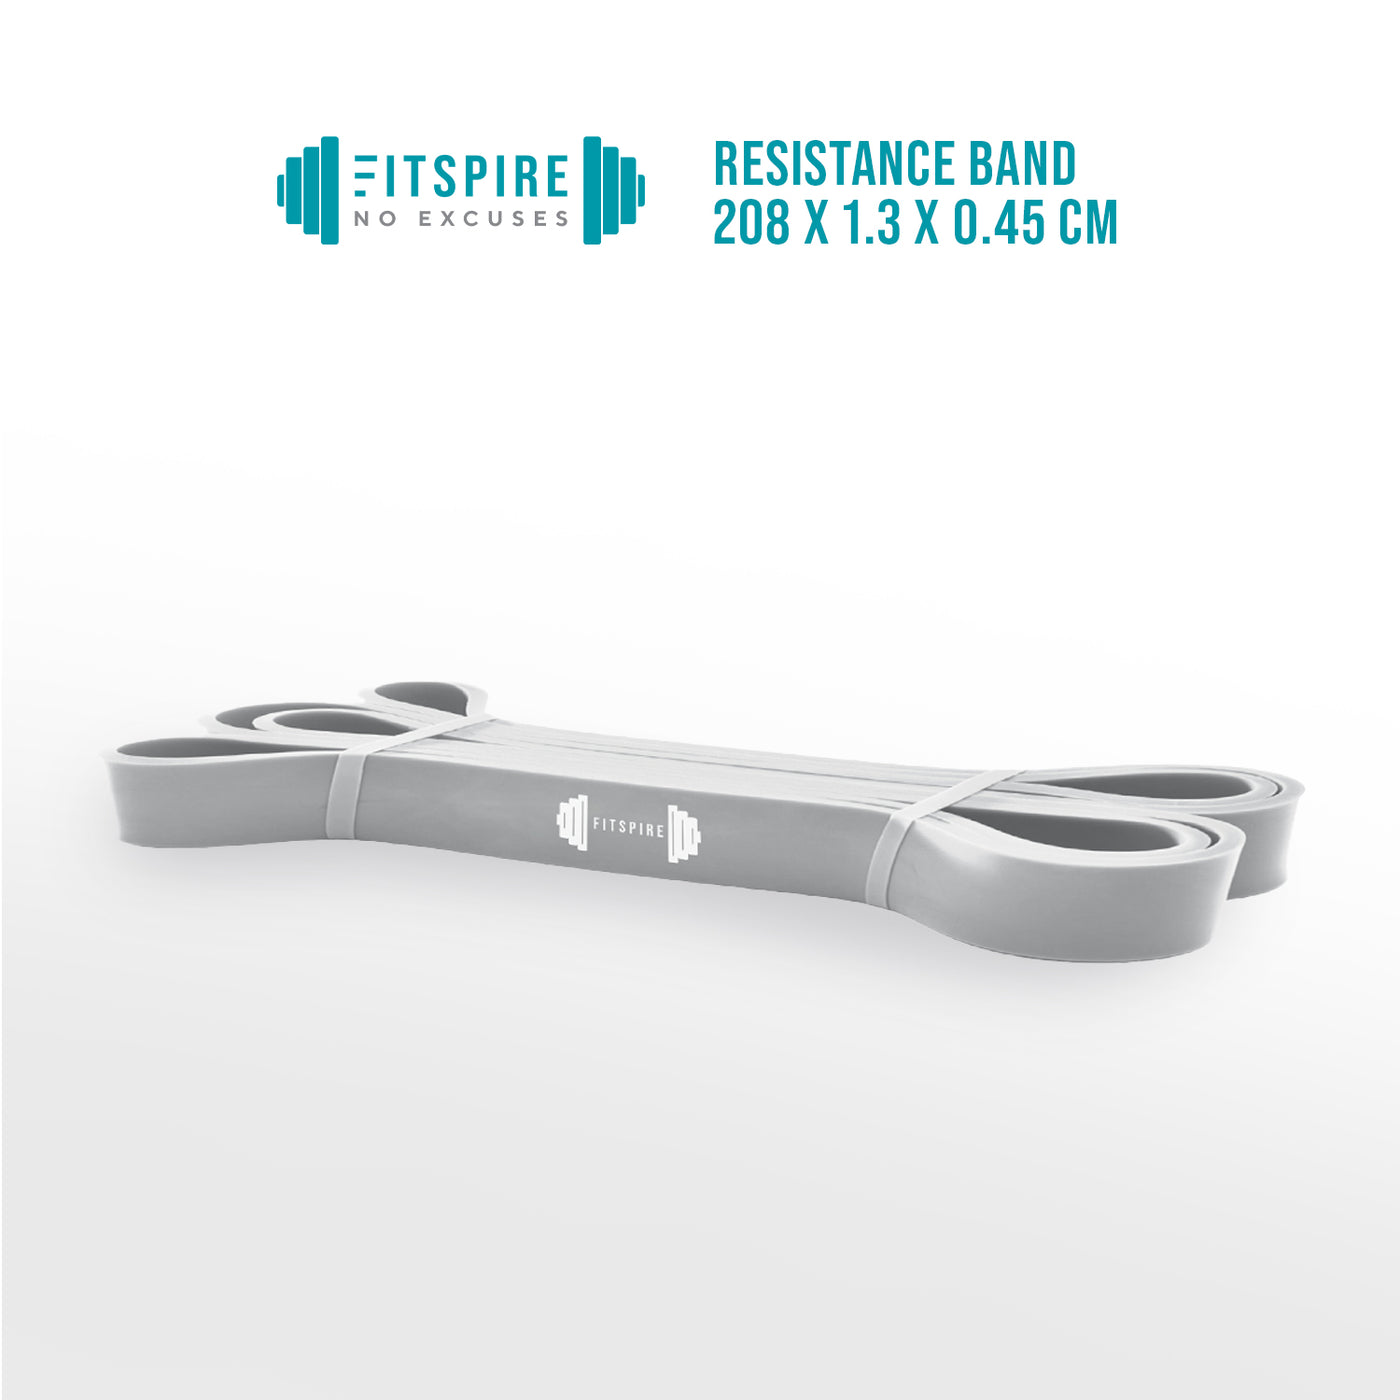 FITSPIRE Premium Latex Resistance Band 208x45x1.3cm